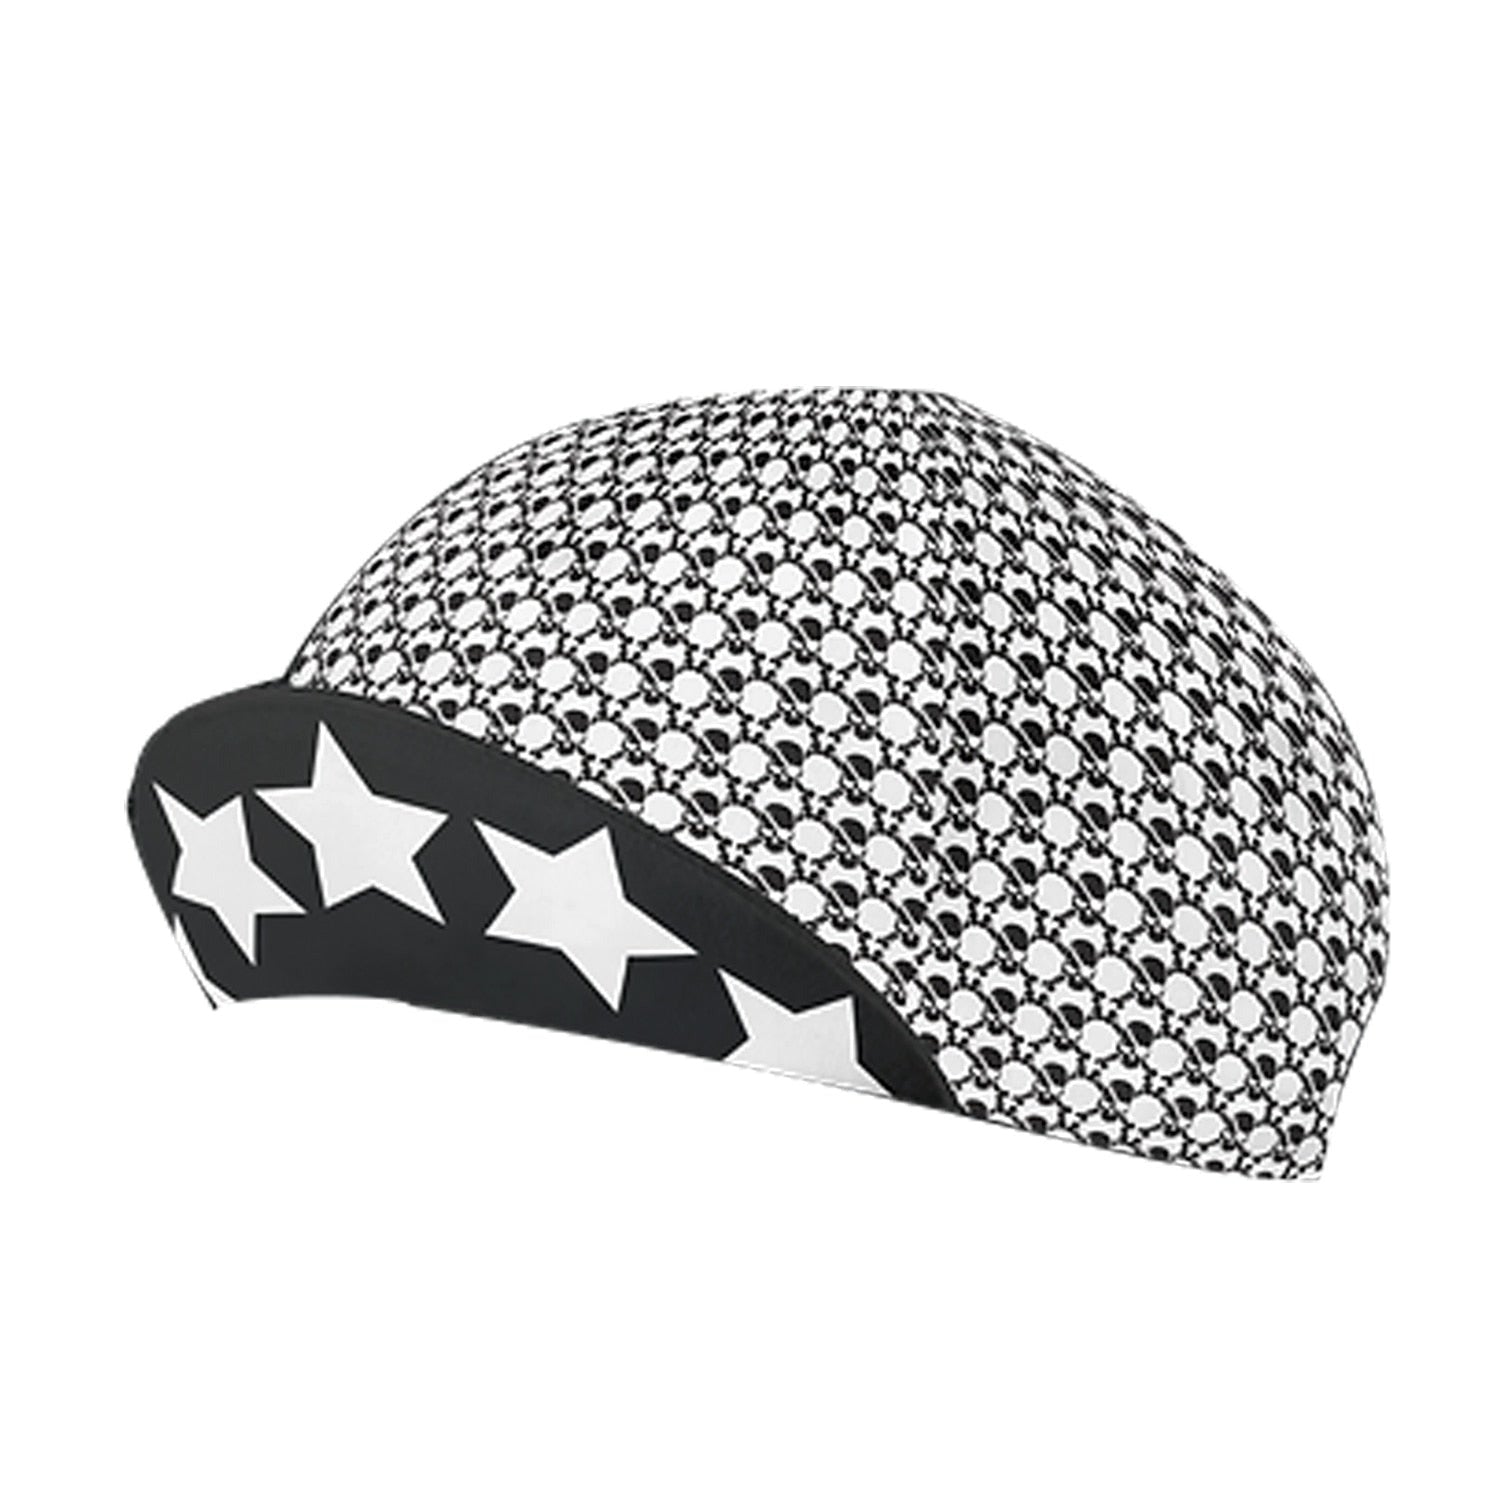 All Skulls Pentagram Black White Quick Dry Bicycle Men's Caps Sports Breathable Summer Balaclava Unisex Wear Cool Hat